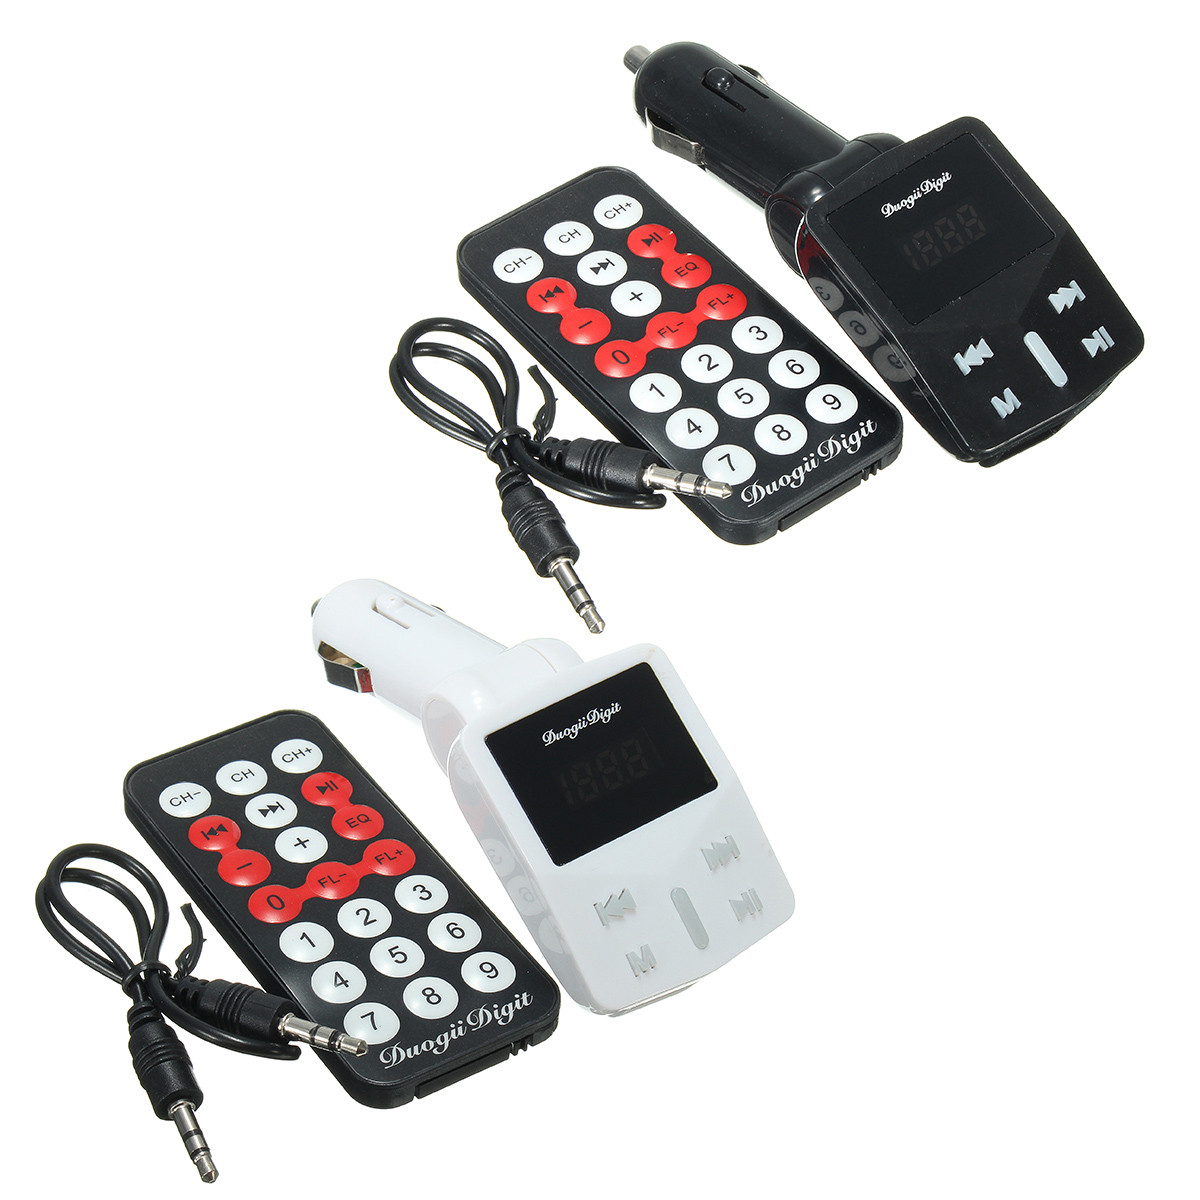 12Prime-LED-Display-Car-Kit-MP3-Player-FM-Transmitter-Modulator-MicroSD-Car-Charger-For-iphoneX-Sams-1235930-6